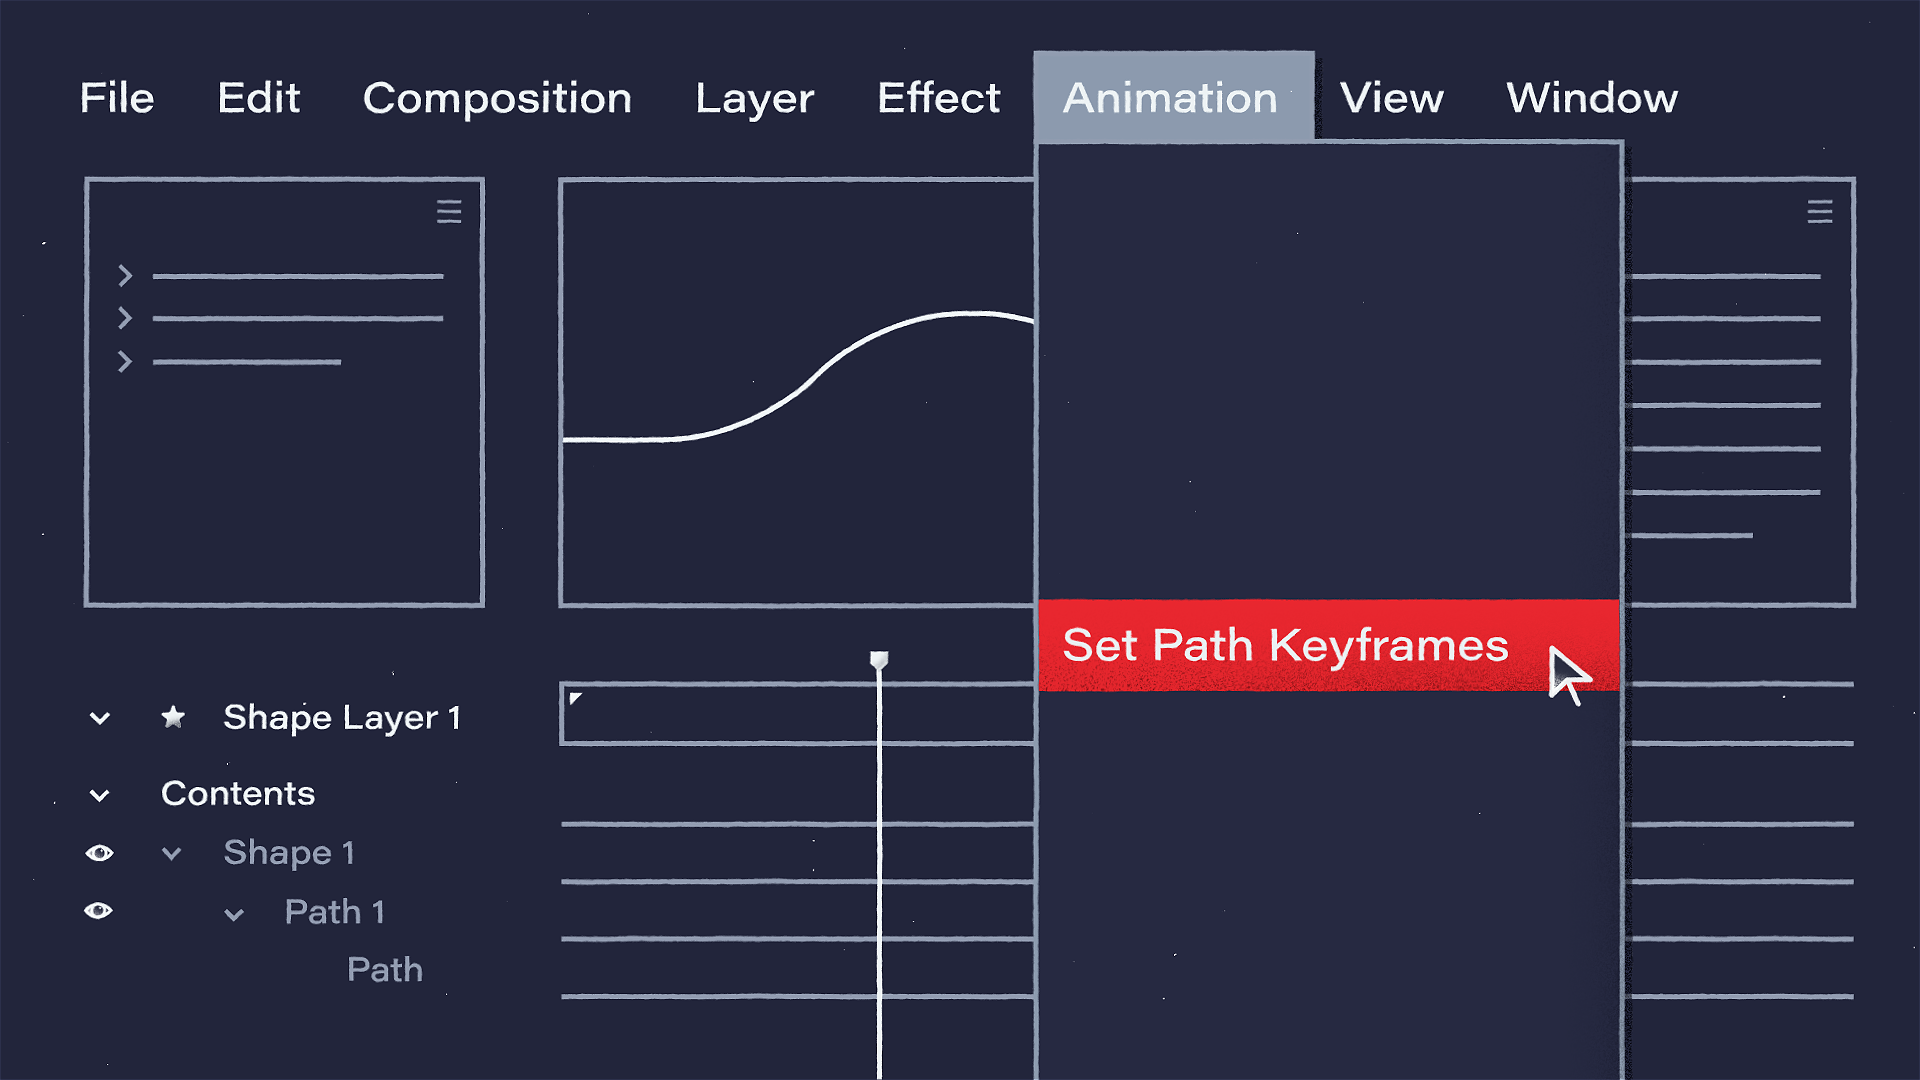 Set Path Keyframes